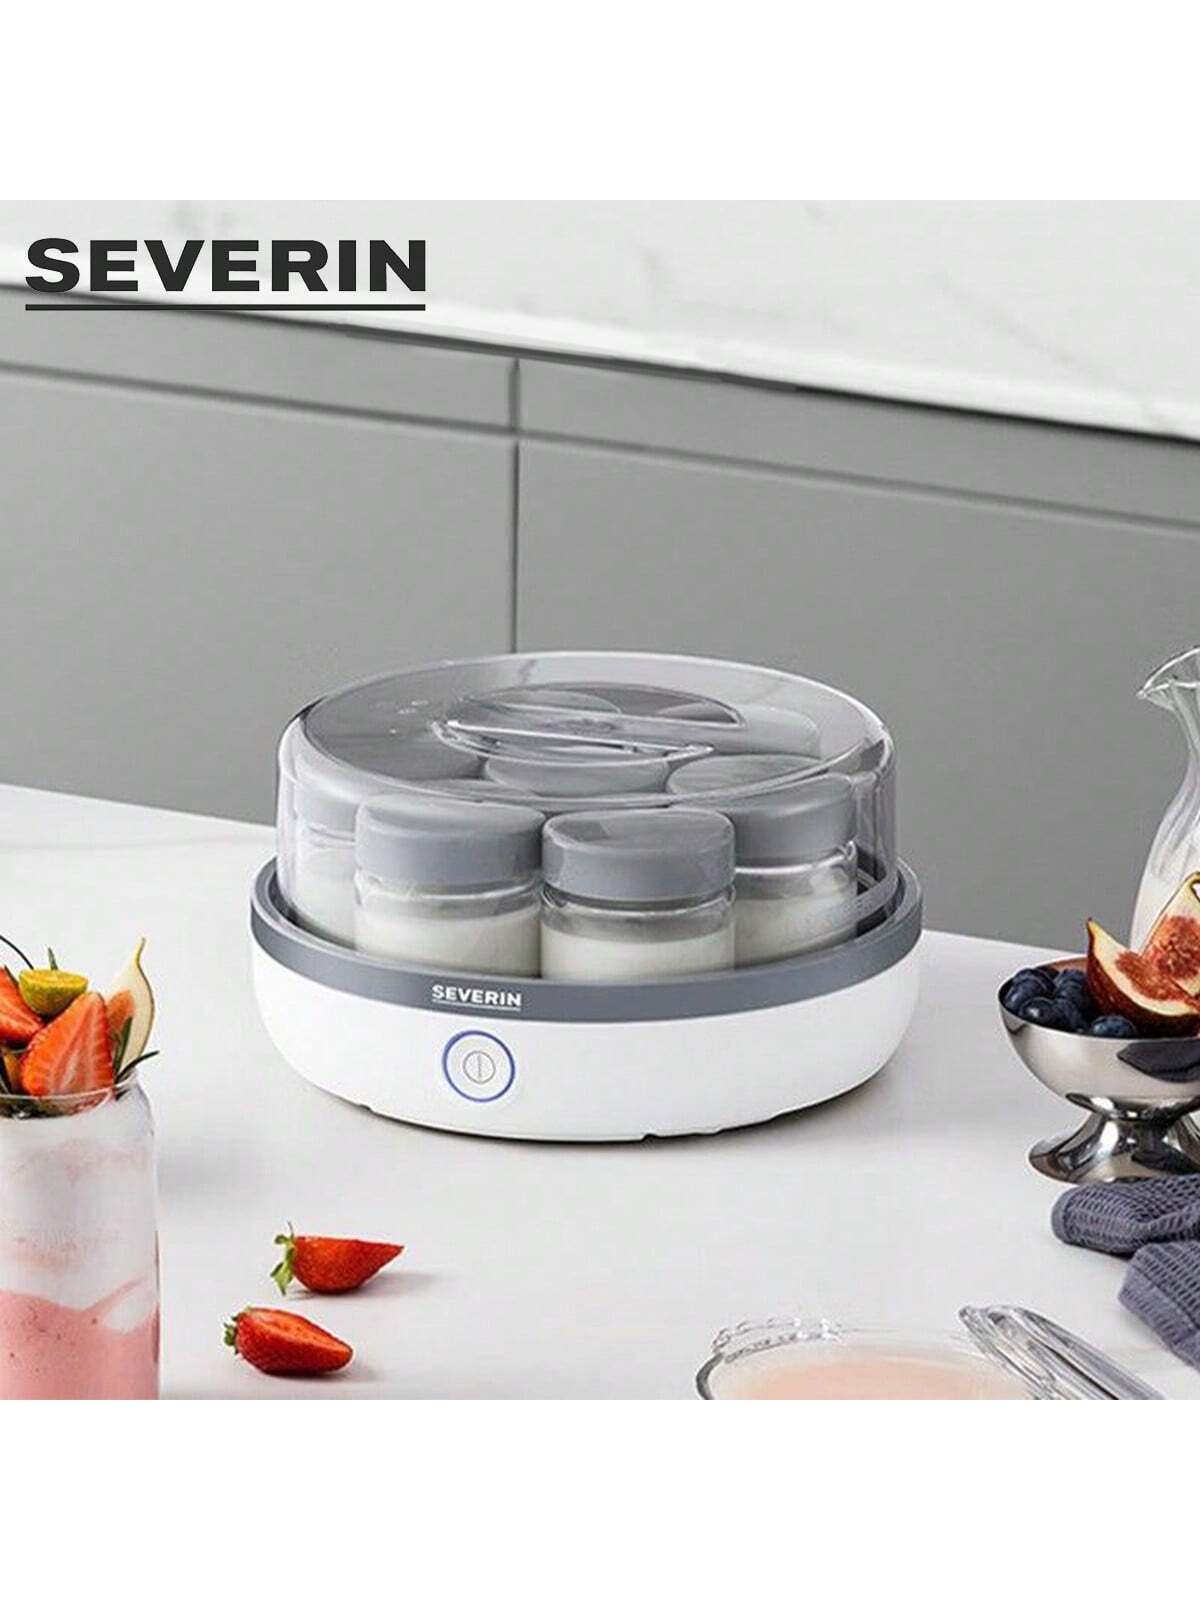 Severin JG3518 Yogurt Maker Healthy Enjoyment with 7 Dispenser Tins-White-1